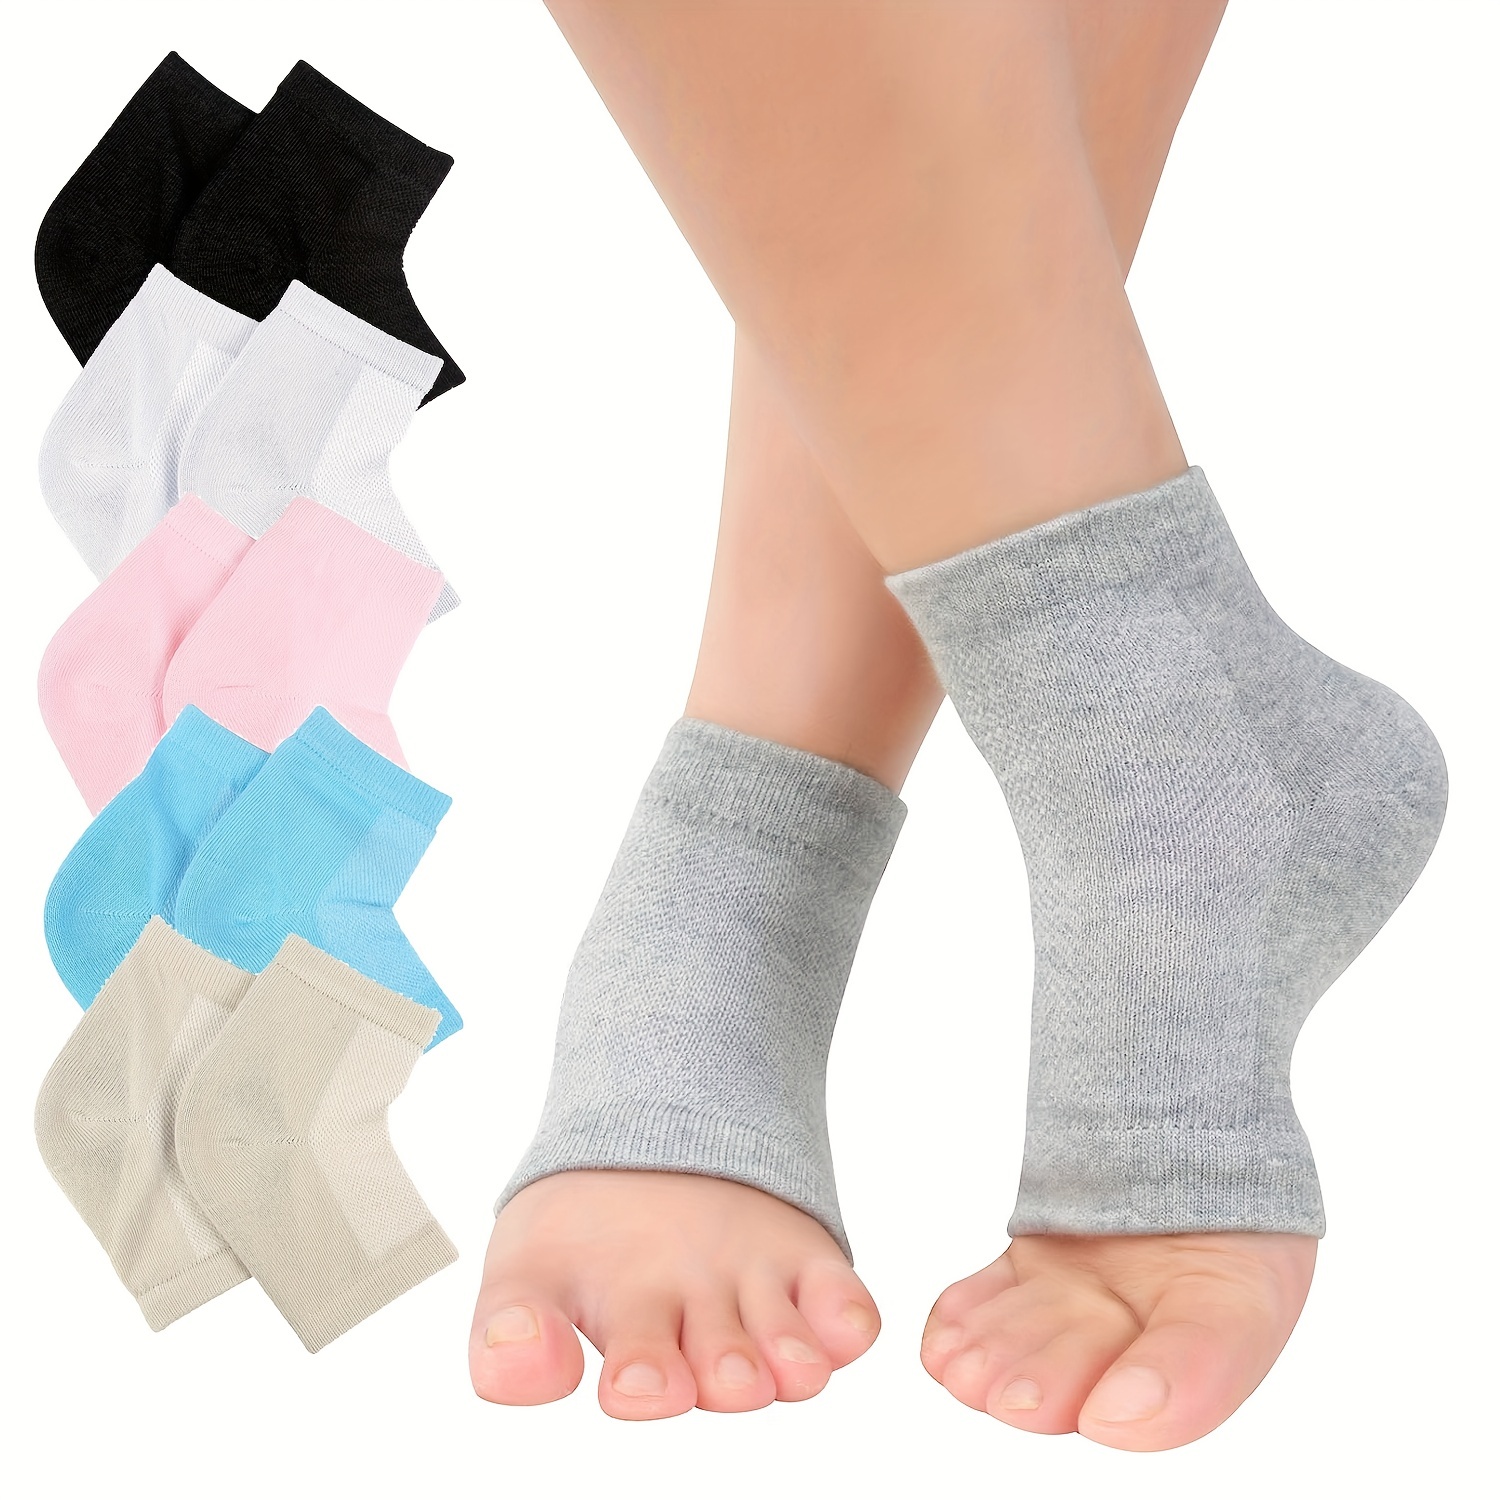 Moisturizing socks in Foot Care 